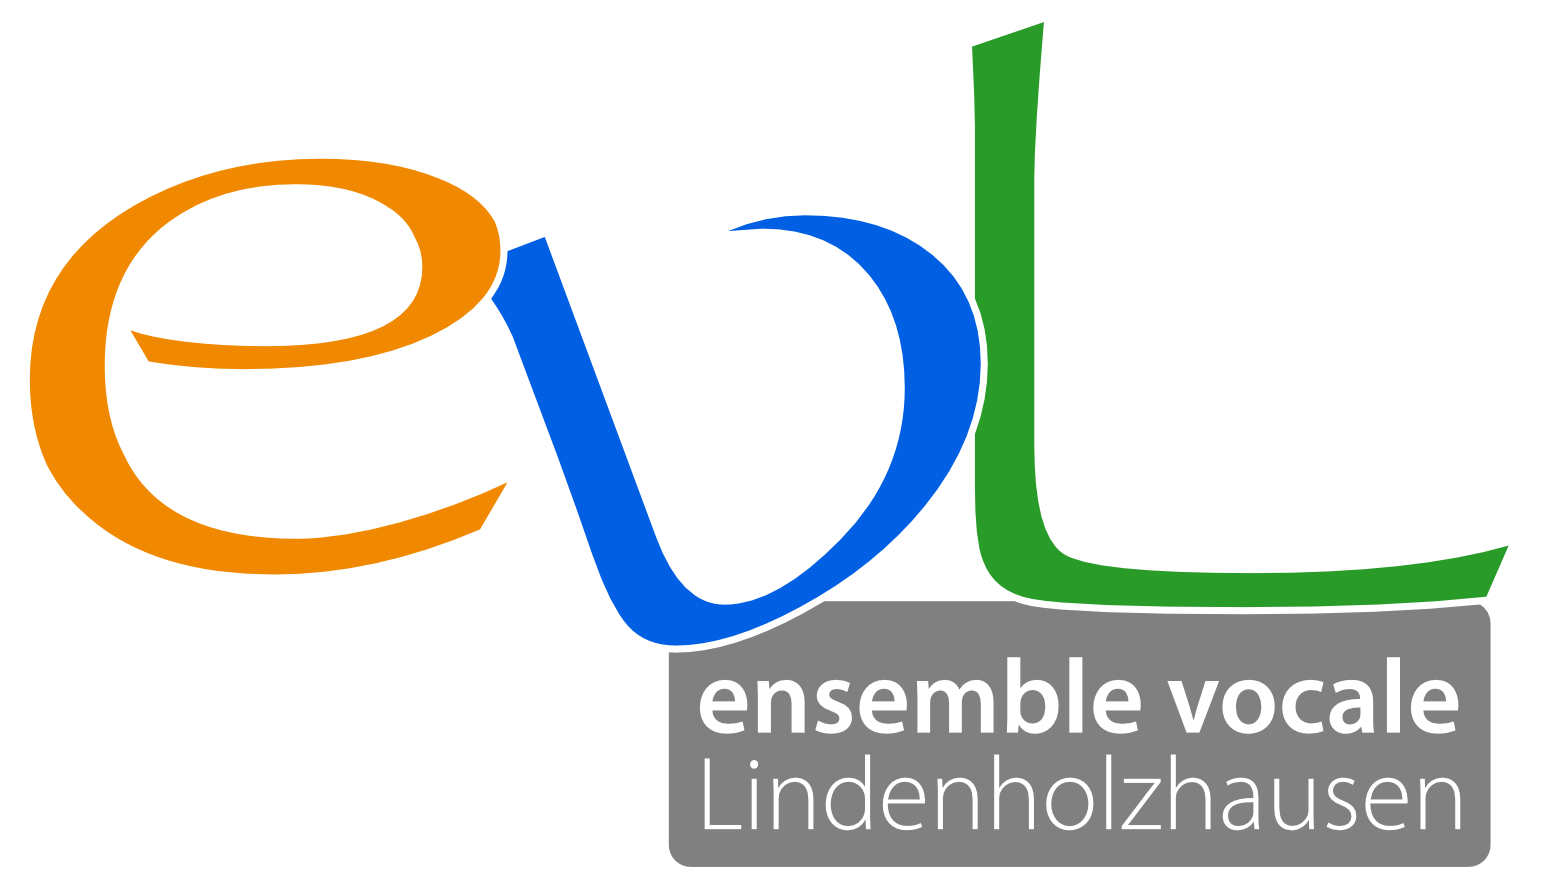 ensemble vocale Lindenholzhausen logo